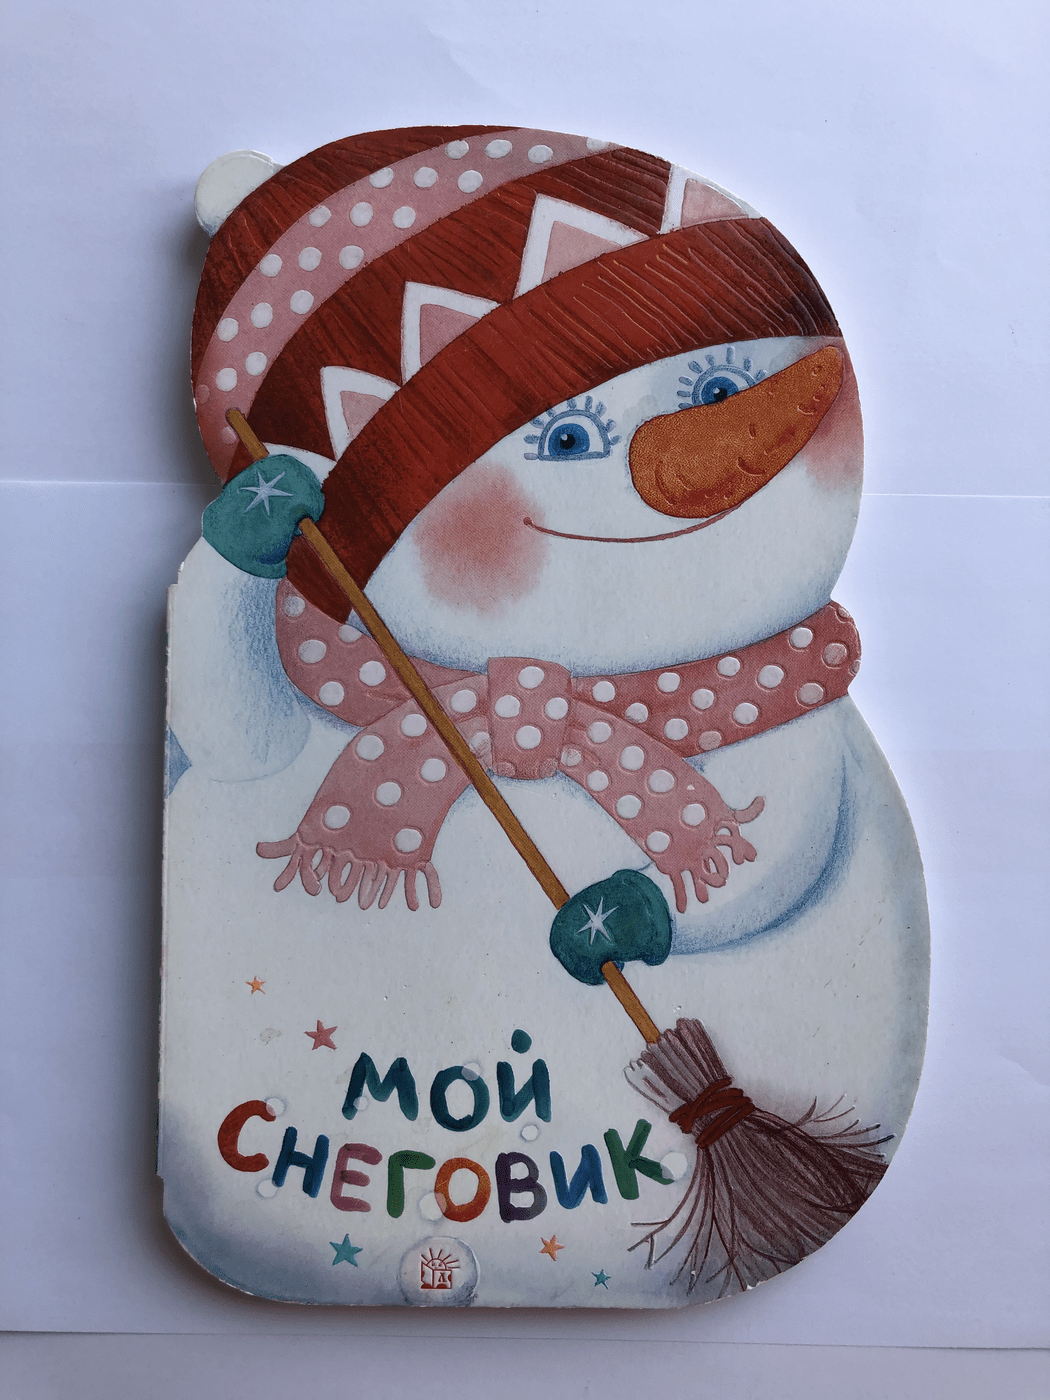 Белозёров Т. М., Жуков И. А., Лагздынь Г. Р.  Мой снеговик БУ | (картон)